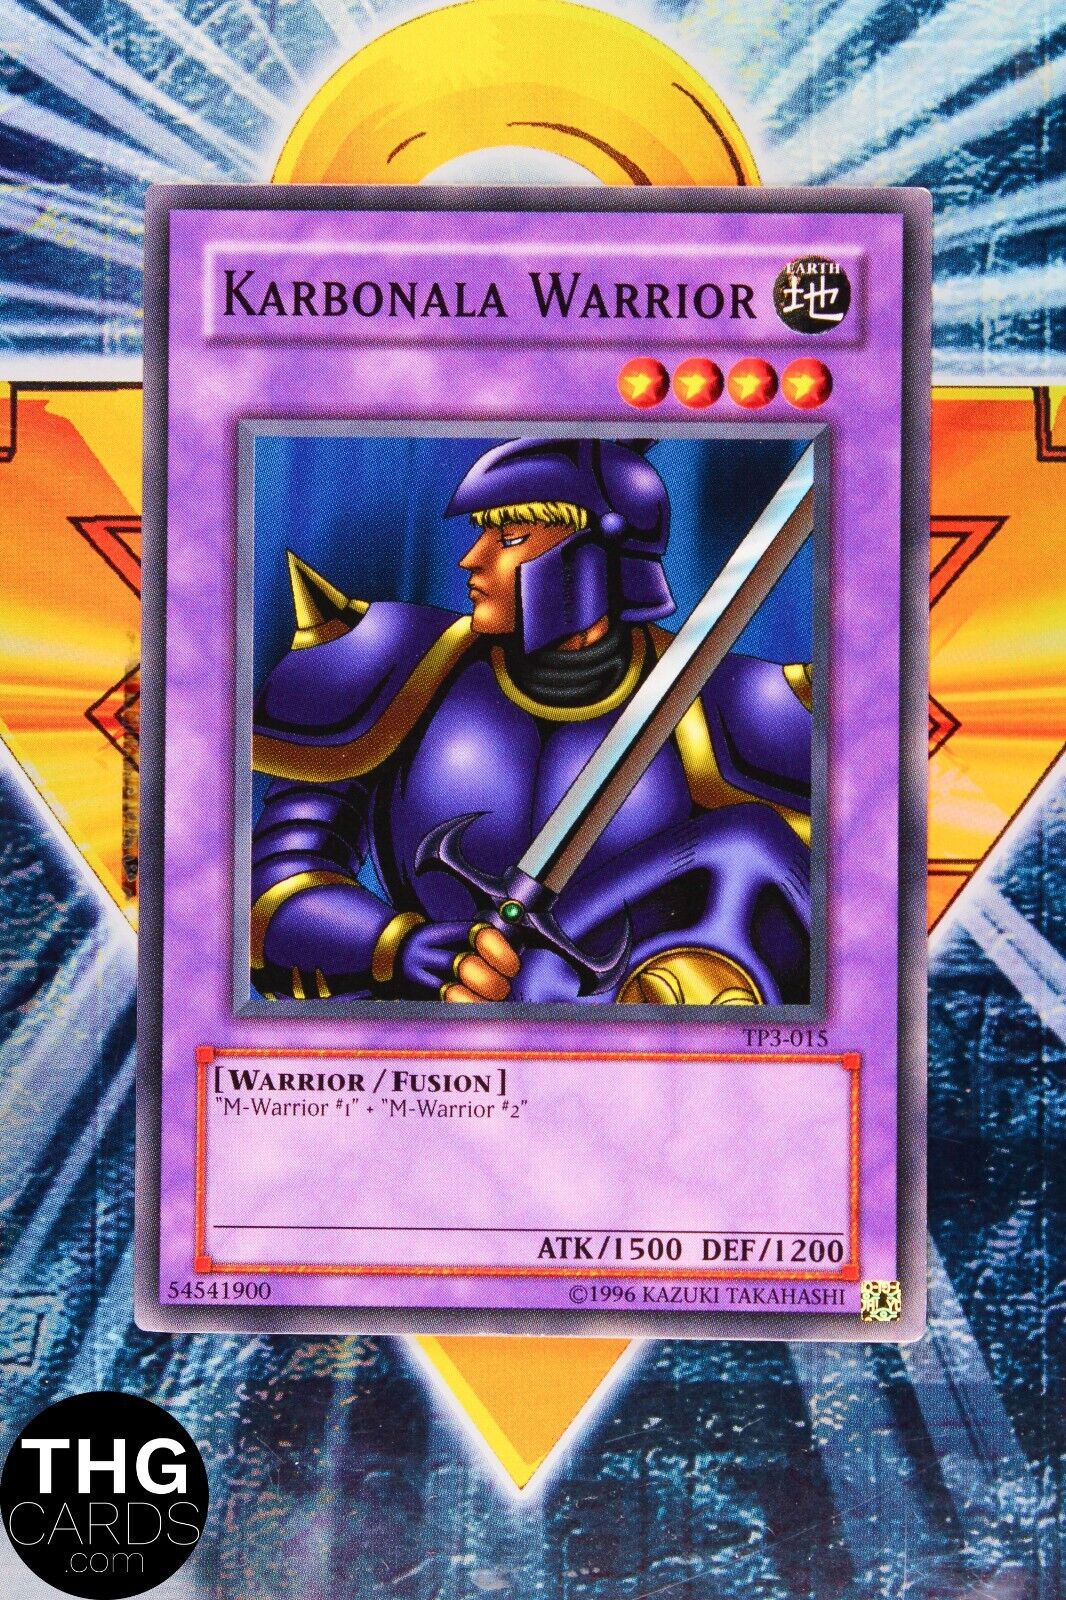 Karbonala Warrior TP3-015 Common Yugioh Card